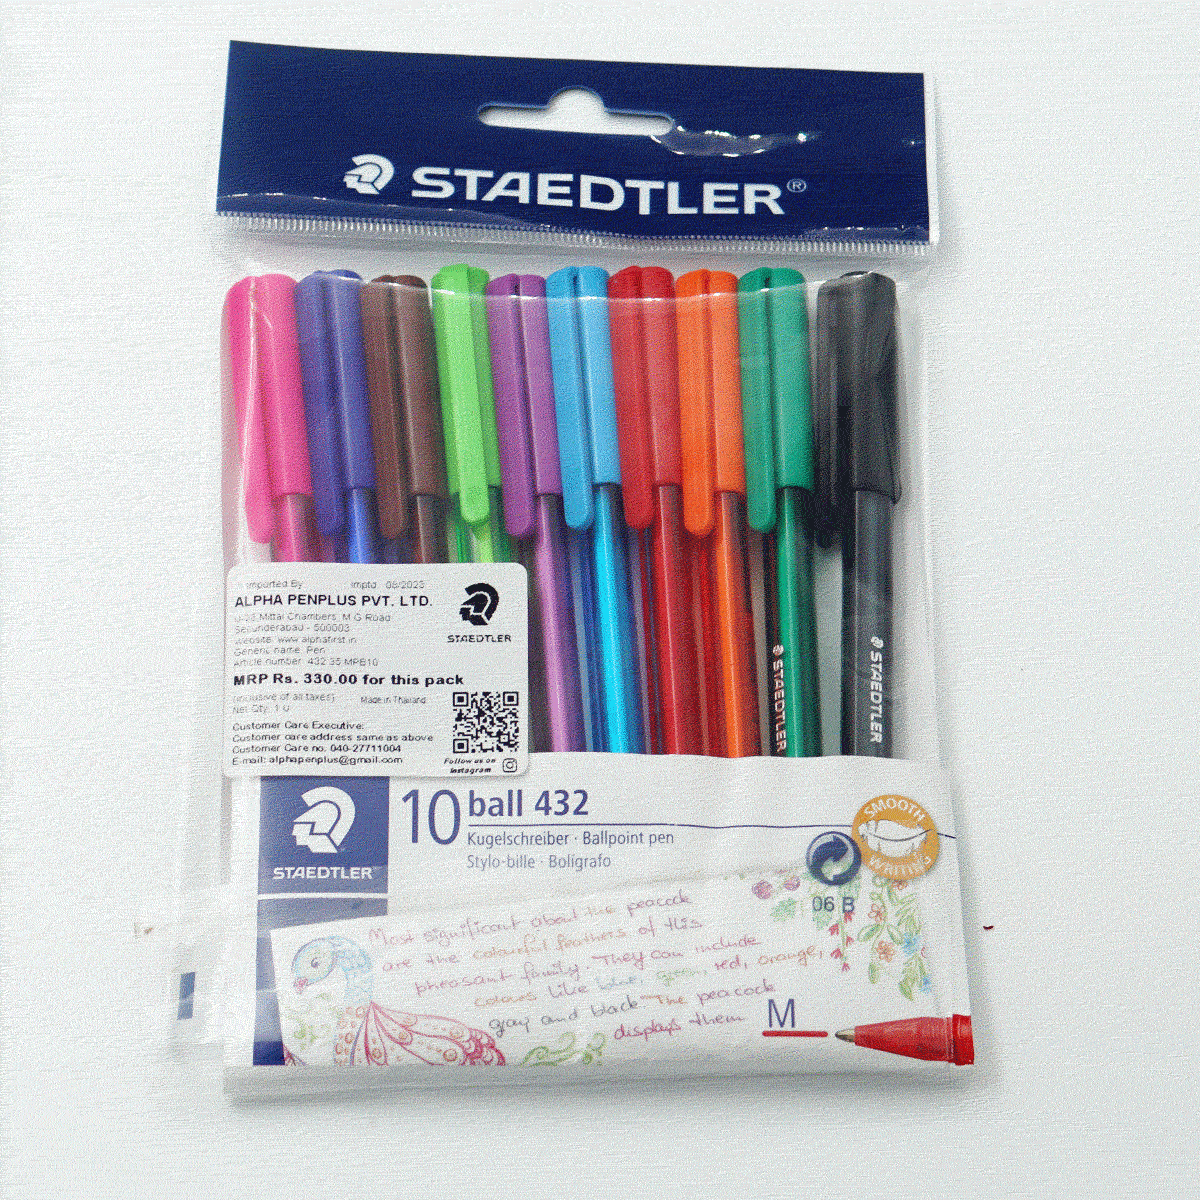 Staedtler 432 Assorted Color Medium Tip Cap Type Ball Pen Set SKU 24395